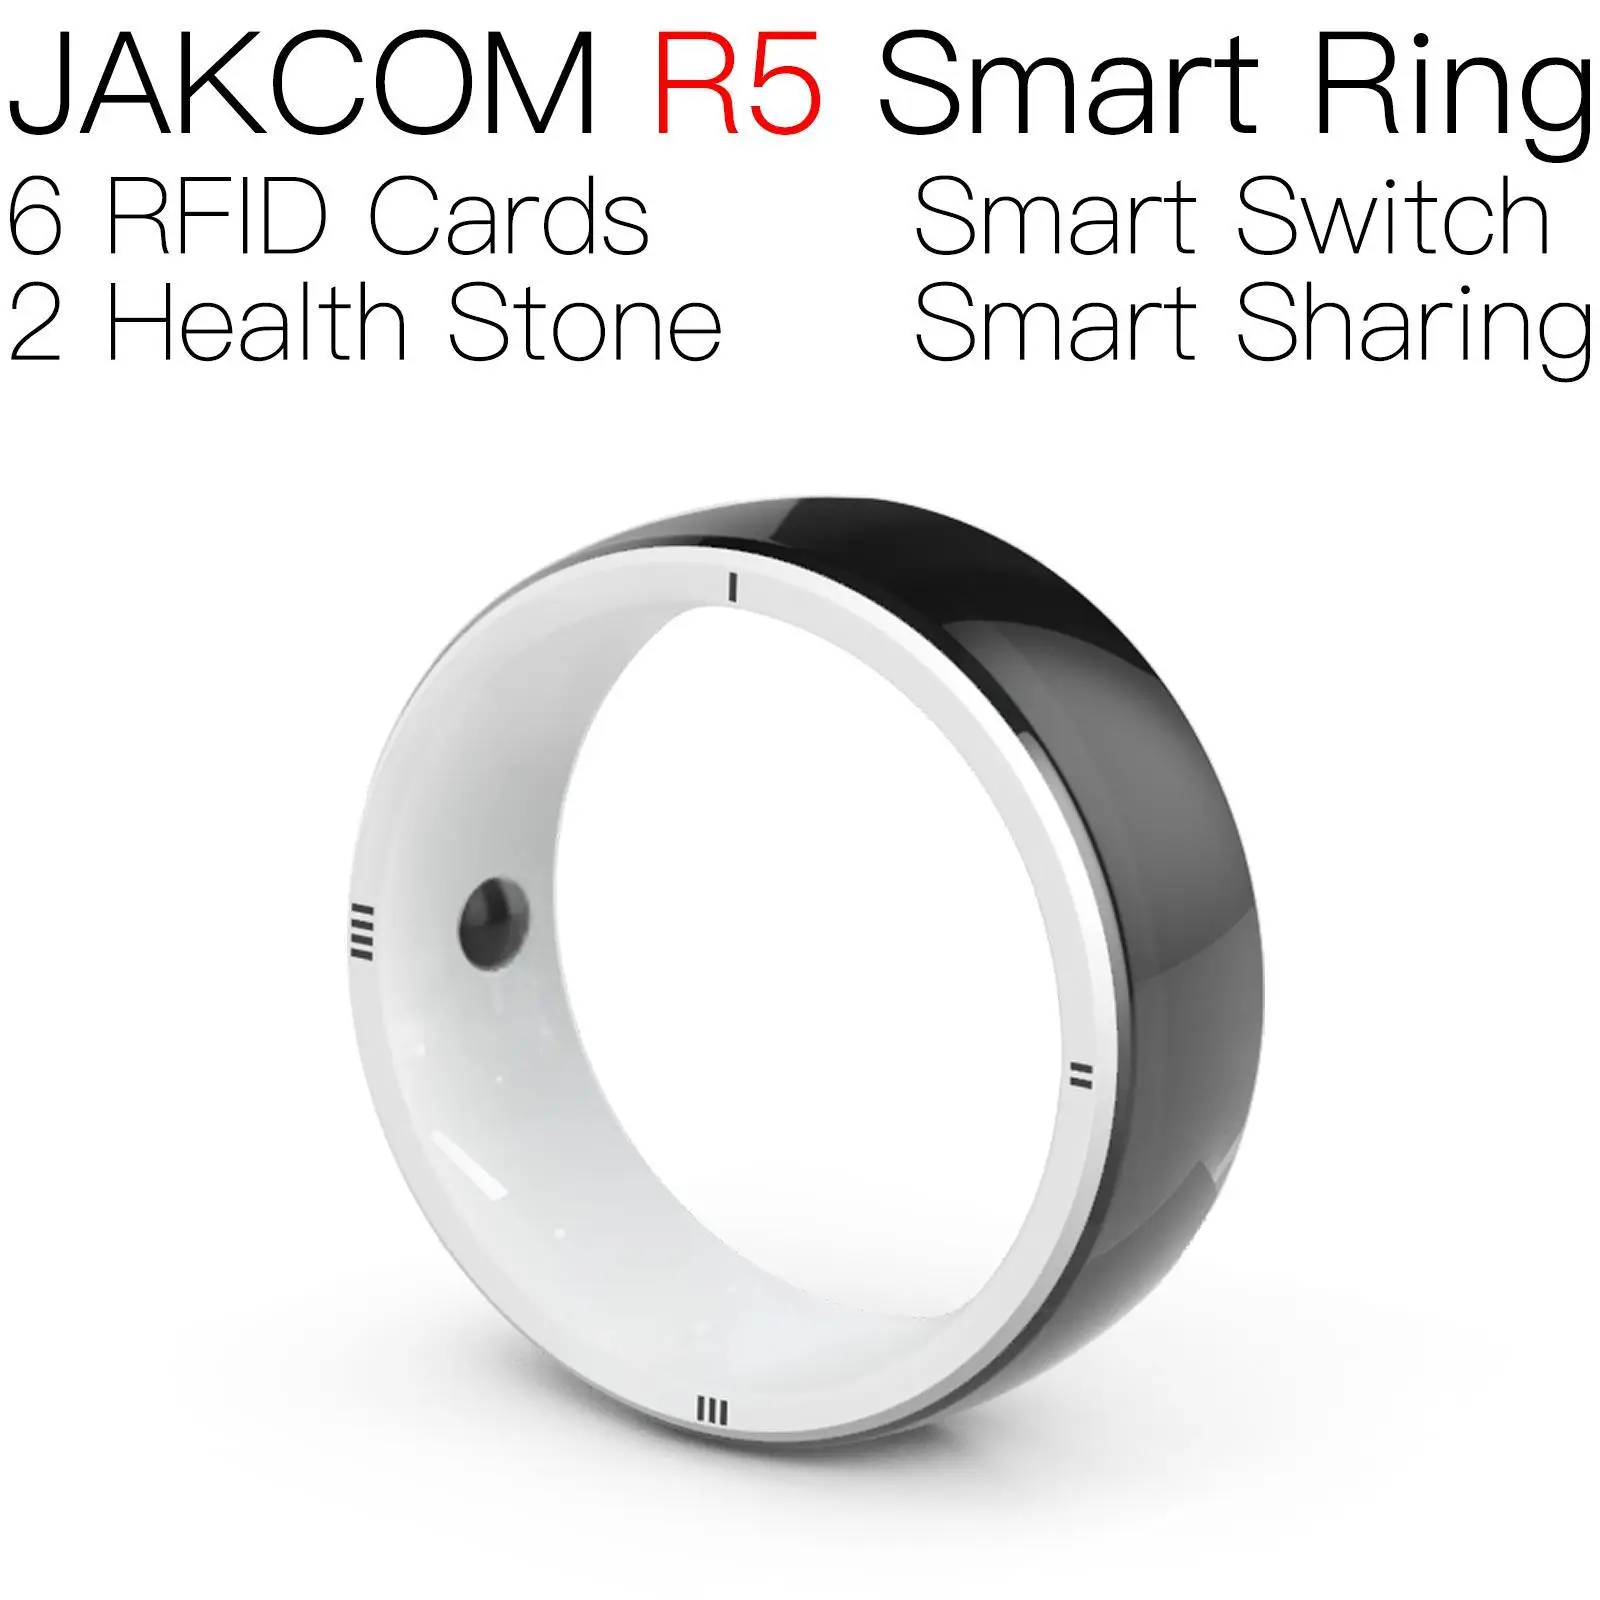 

JAKCOM R5 Smart Ring Match to nfc tips stickers card key tag pvc cartas pack amiboo swich uhf rfid writable tid blocking